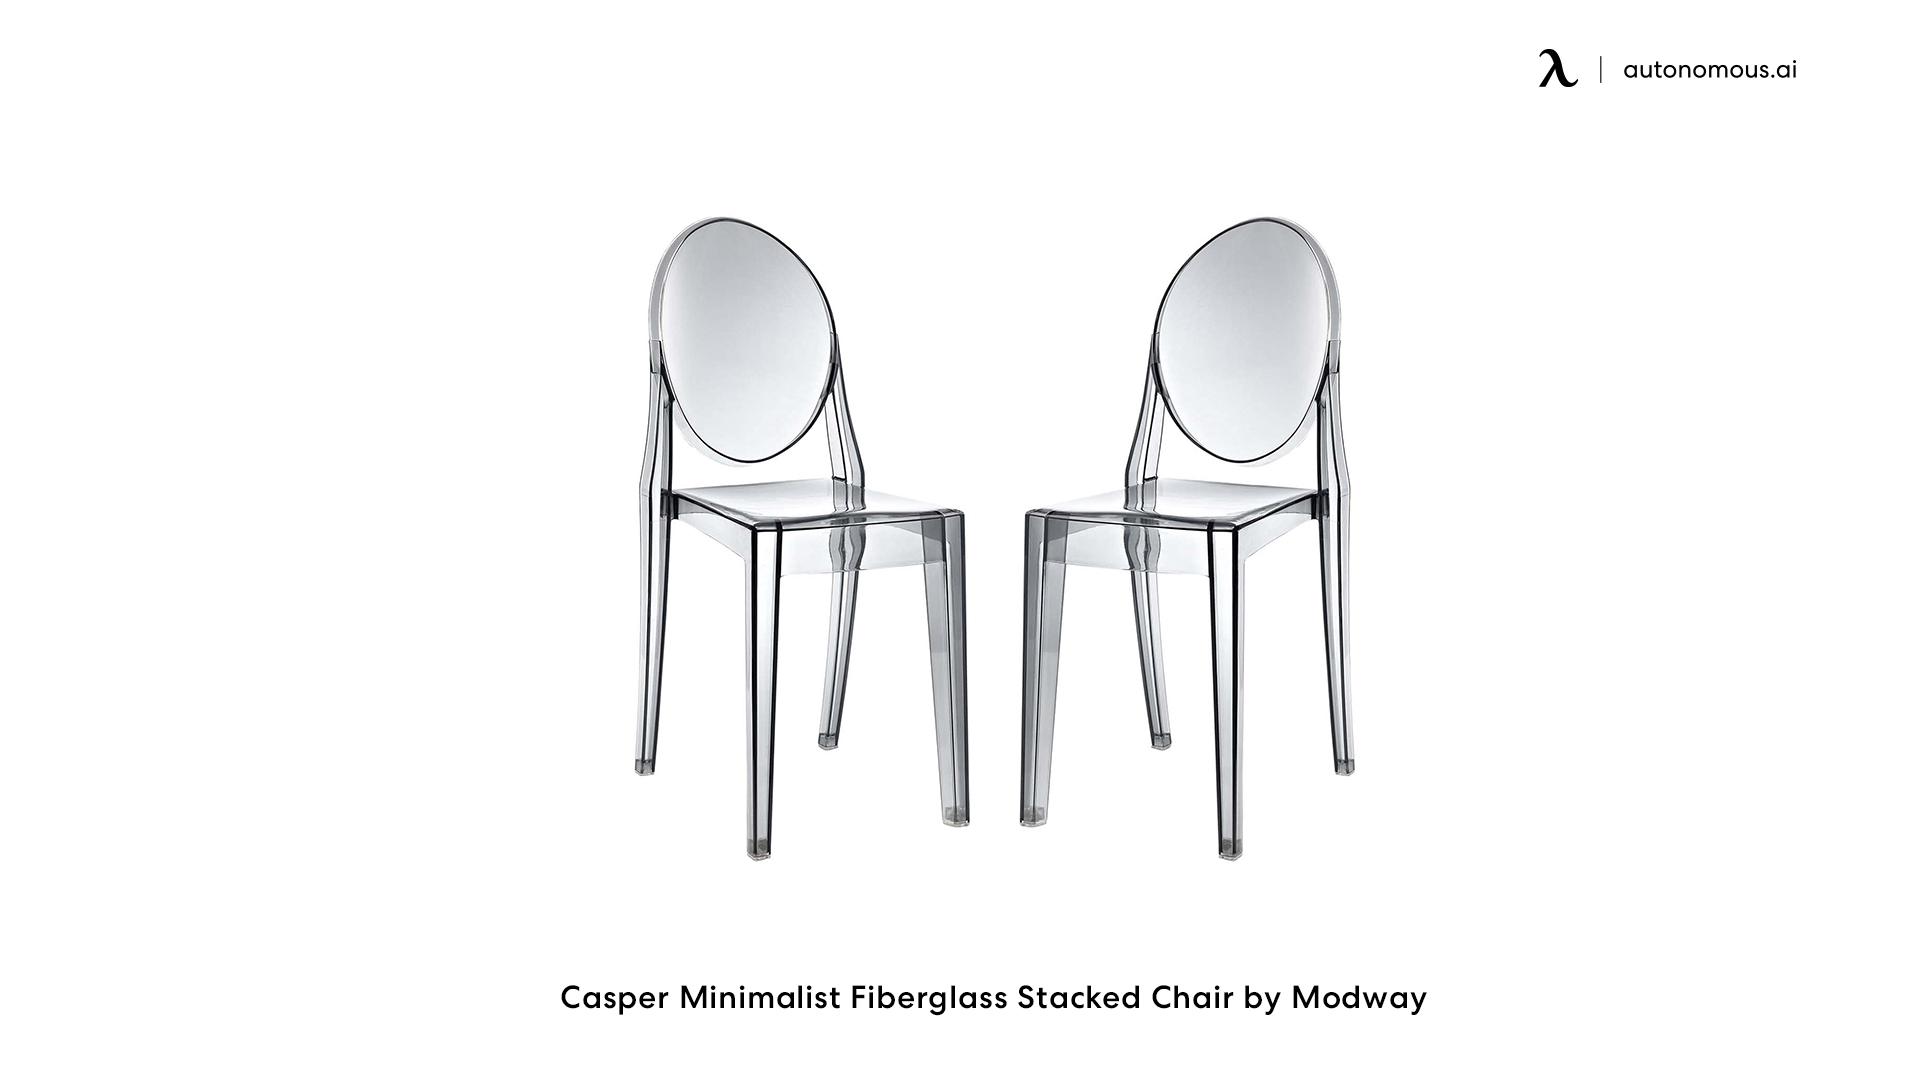 Casper Minimalist Fiberglass Stacked Chair by Modway